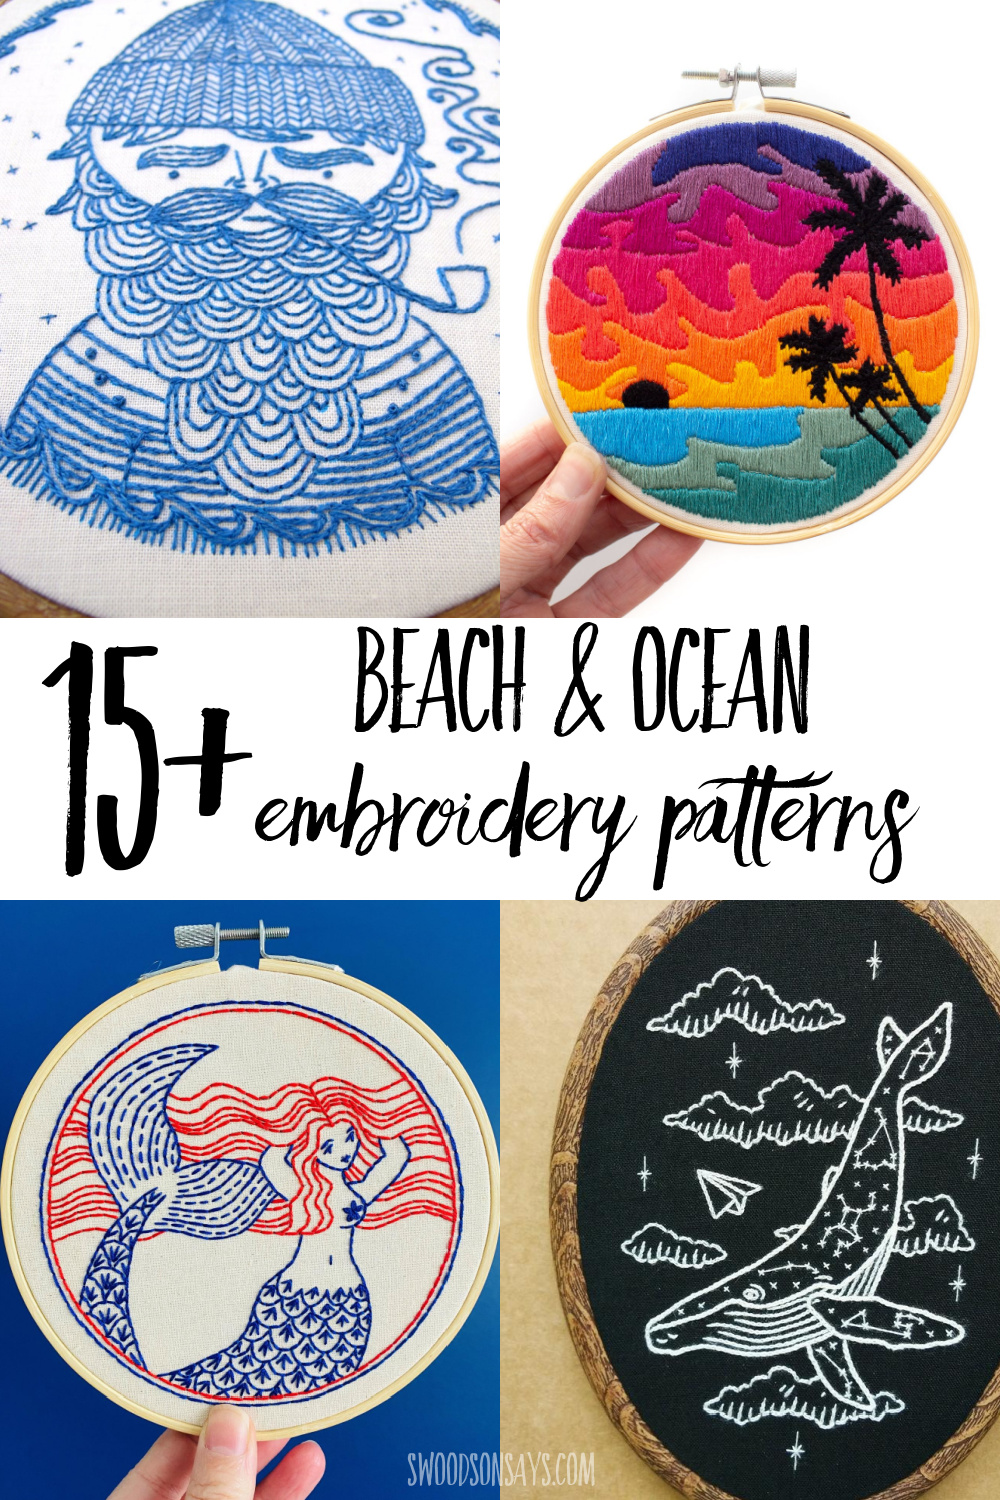 Ocean & beach embroidery patterns